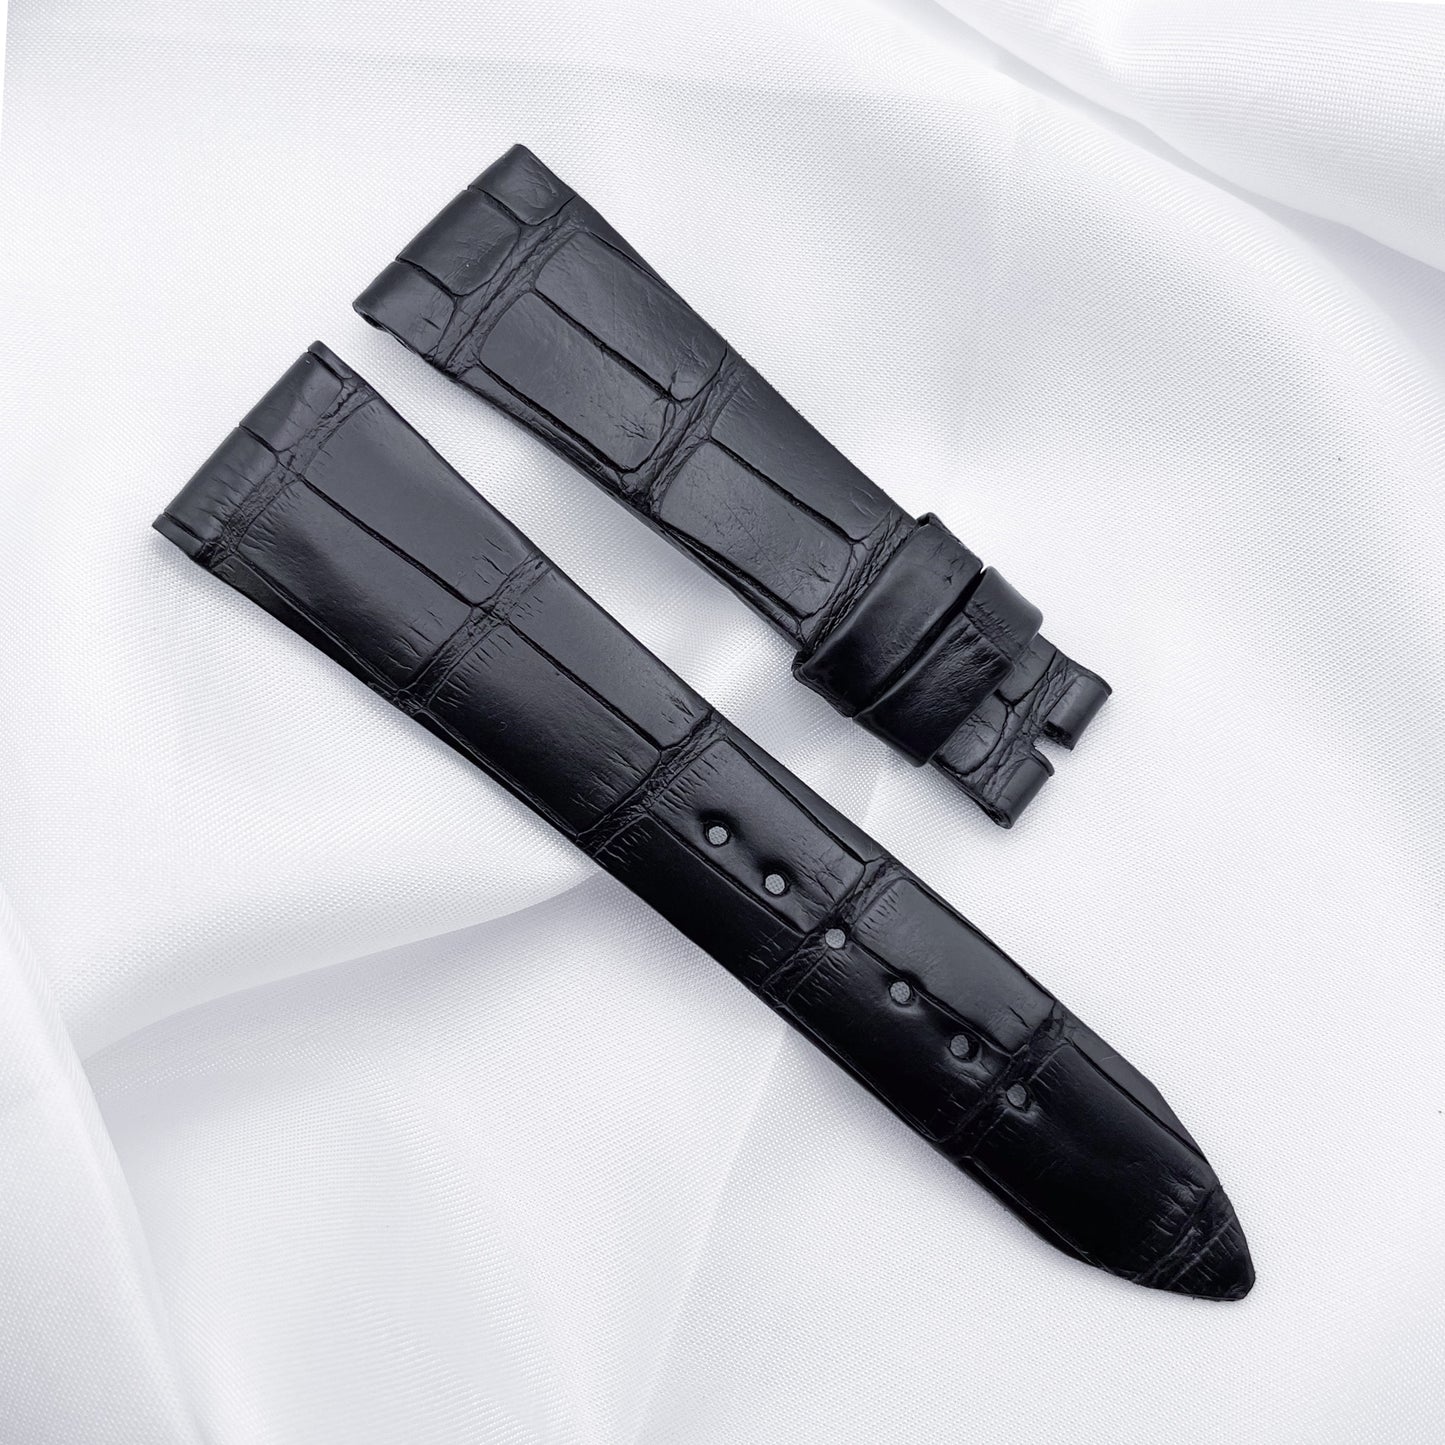 20mm Black Antique Finish Alligator Leather Universal Strap